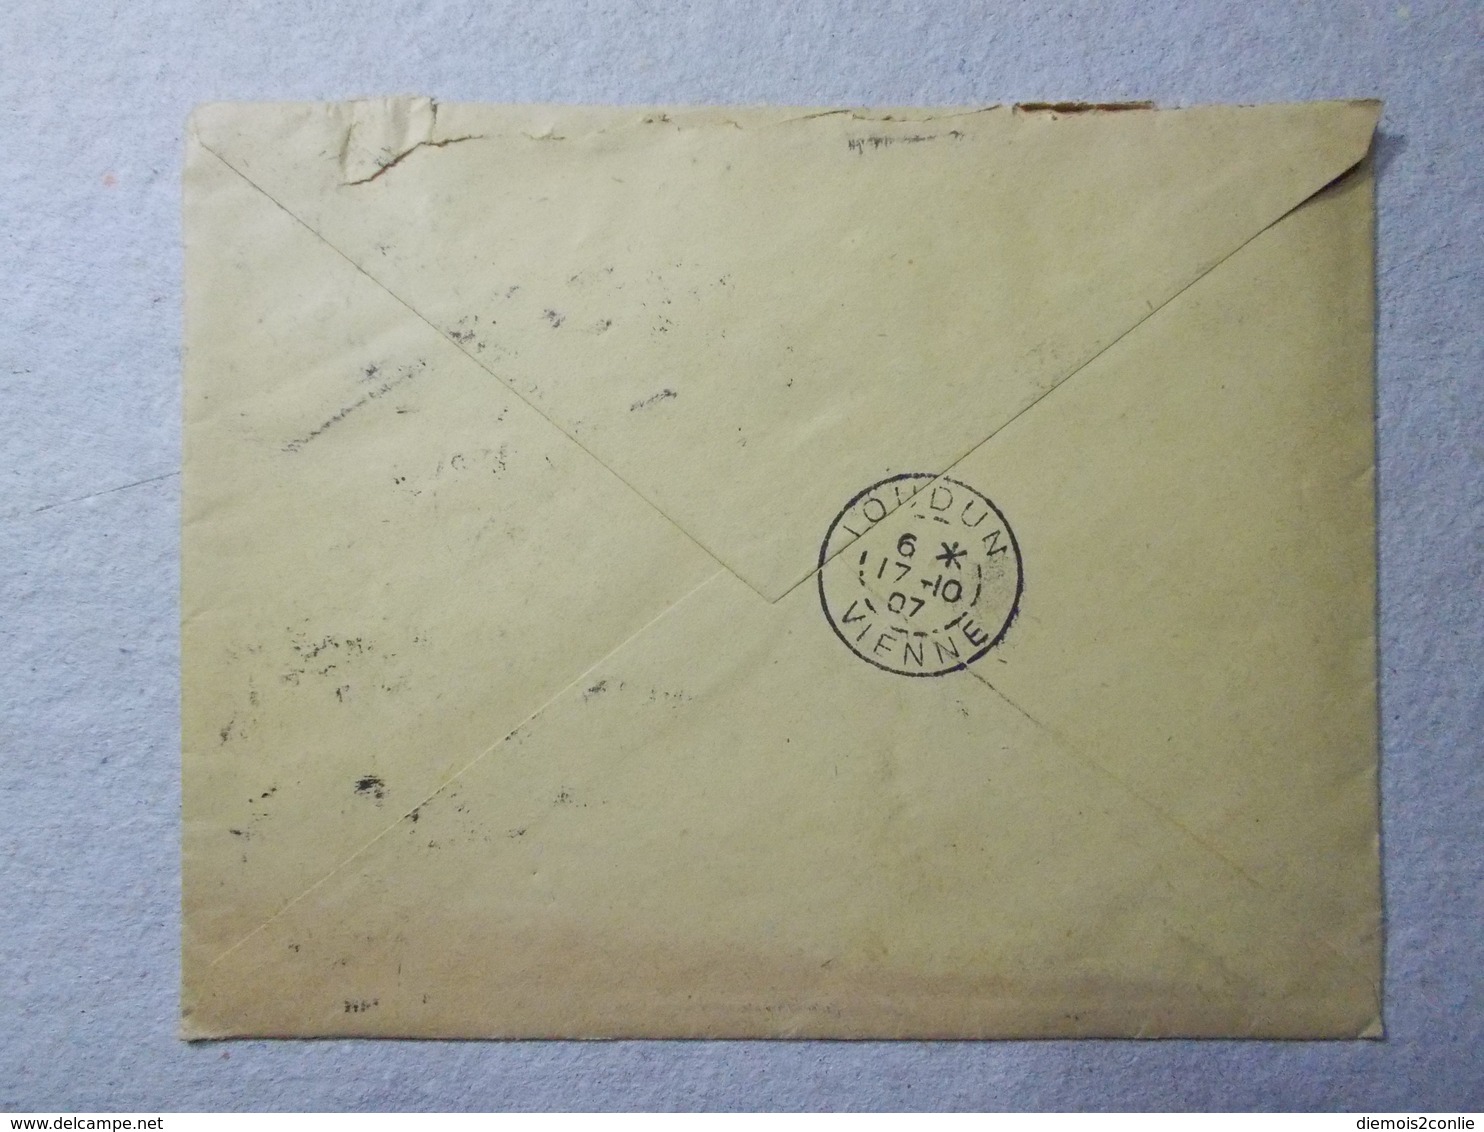 Marcophilie - Lettre Enveloppe Obliteration Timbre - Publicite Professionnelle 1907 (2457) - 1877-1920: Semi Modern Period